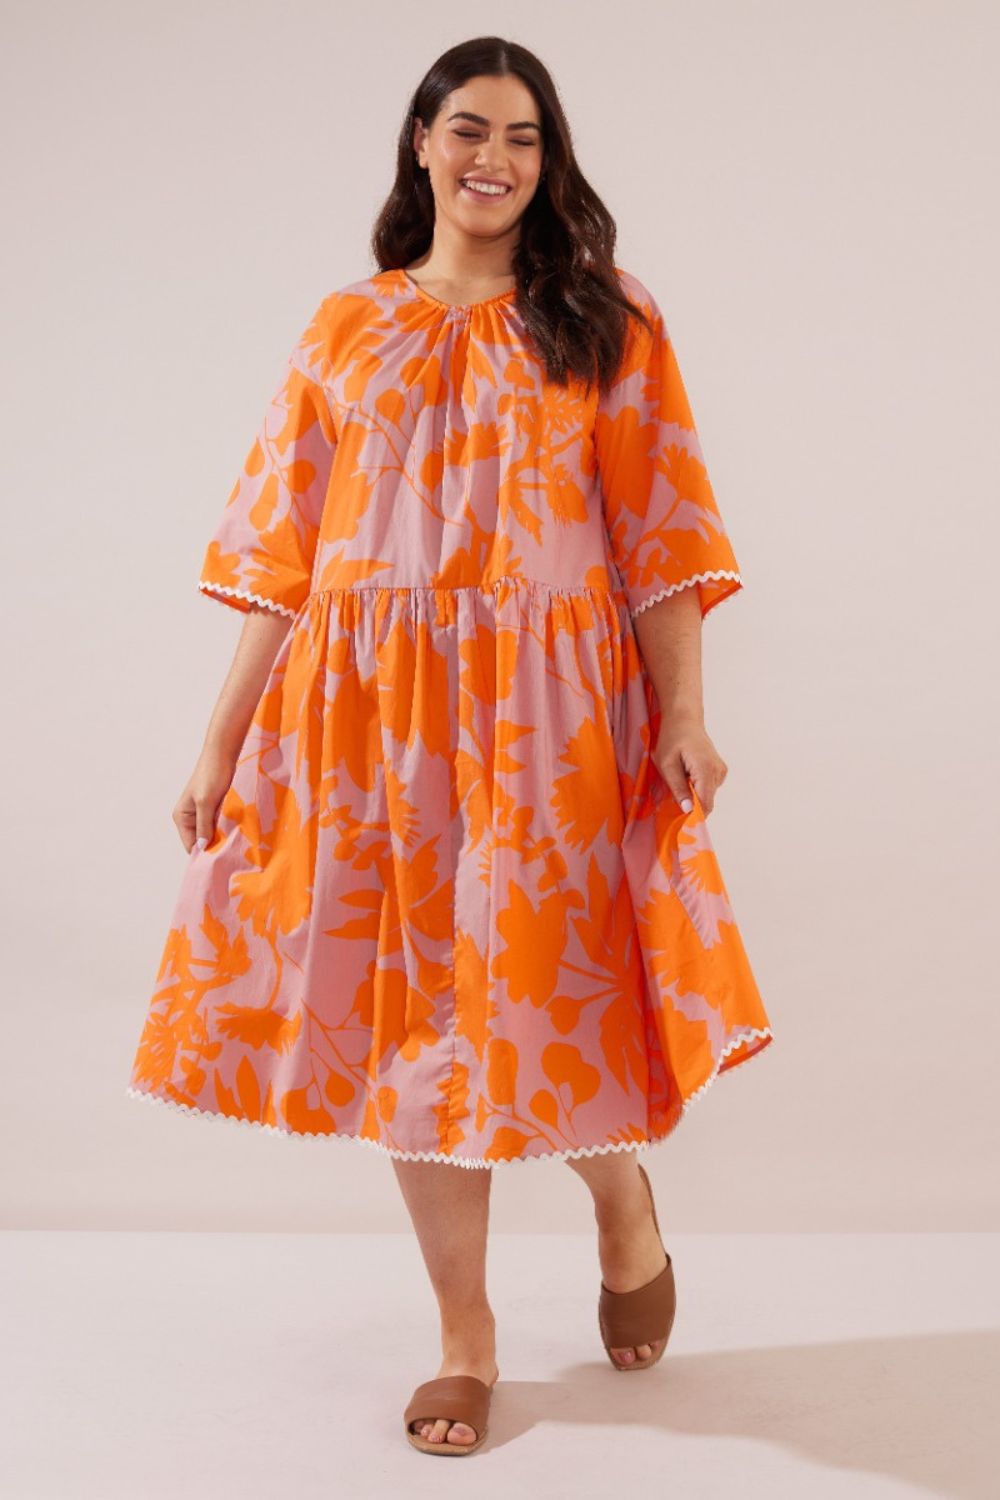 Yarra Trail Silhouette Print Dress